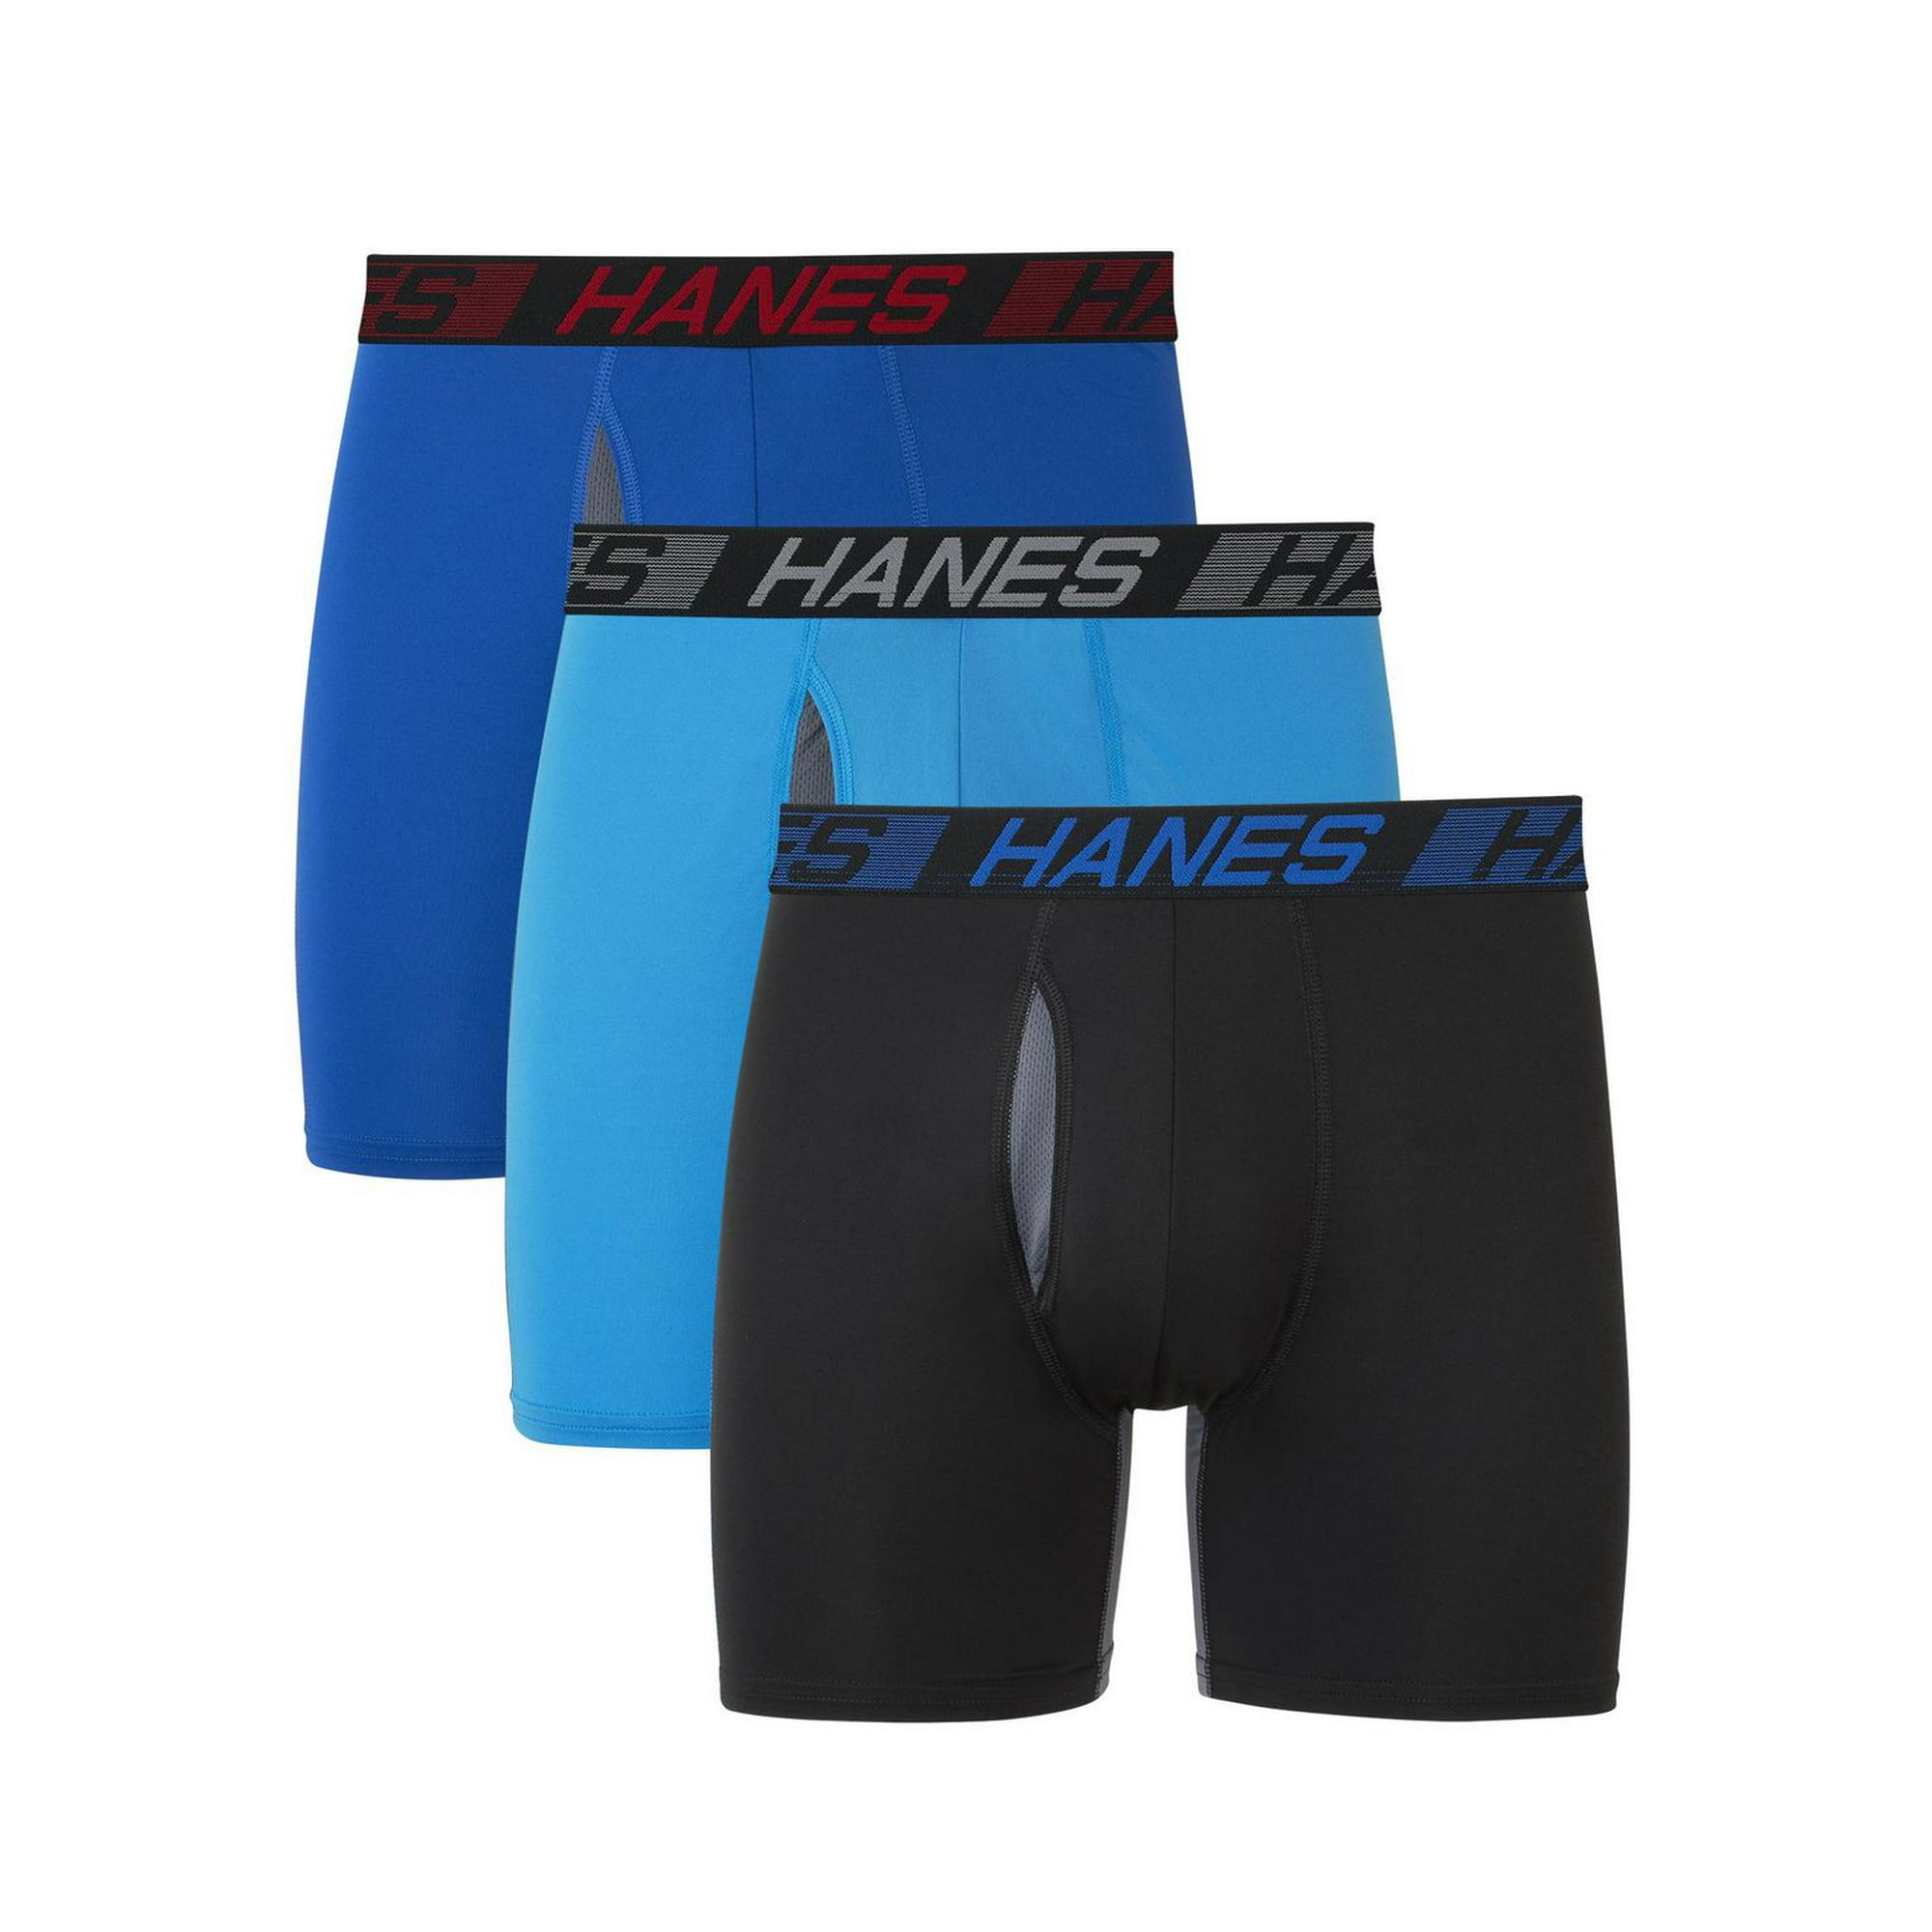 Hanes X-Temp Total Support Pouch Men's Underwear Boxer Briefs Pack,  Anti-Chafing, Moisture-Wicking Underwear, 3-Pack, Hanes X-Temp Boxer Briefs  3 Pack